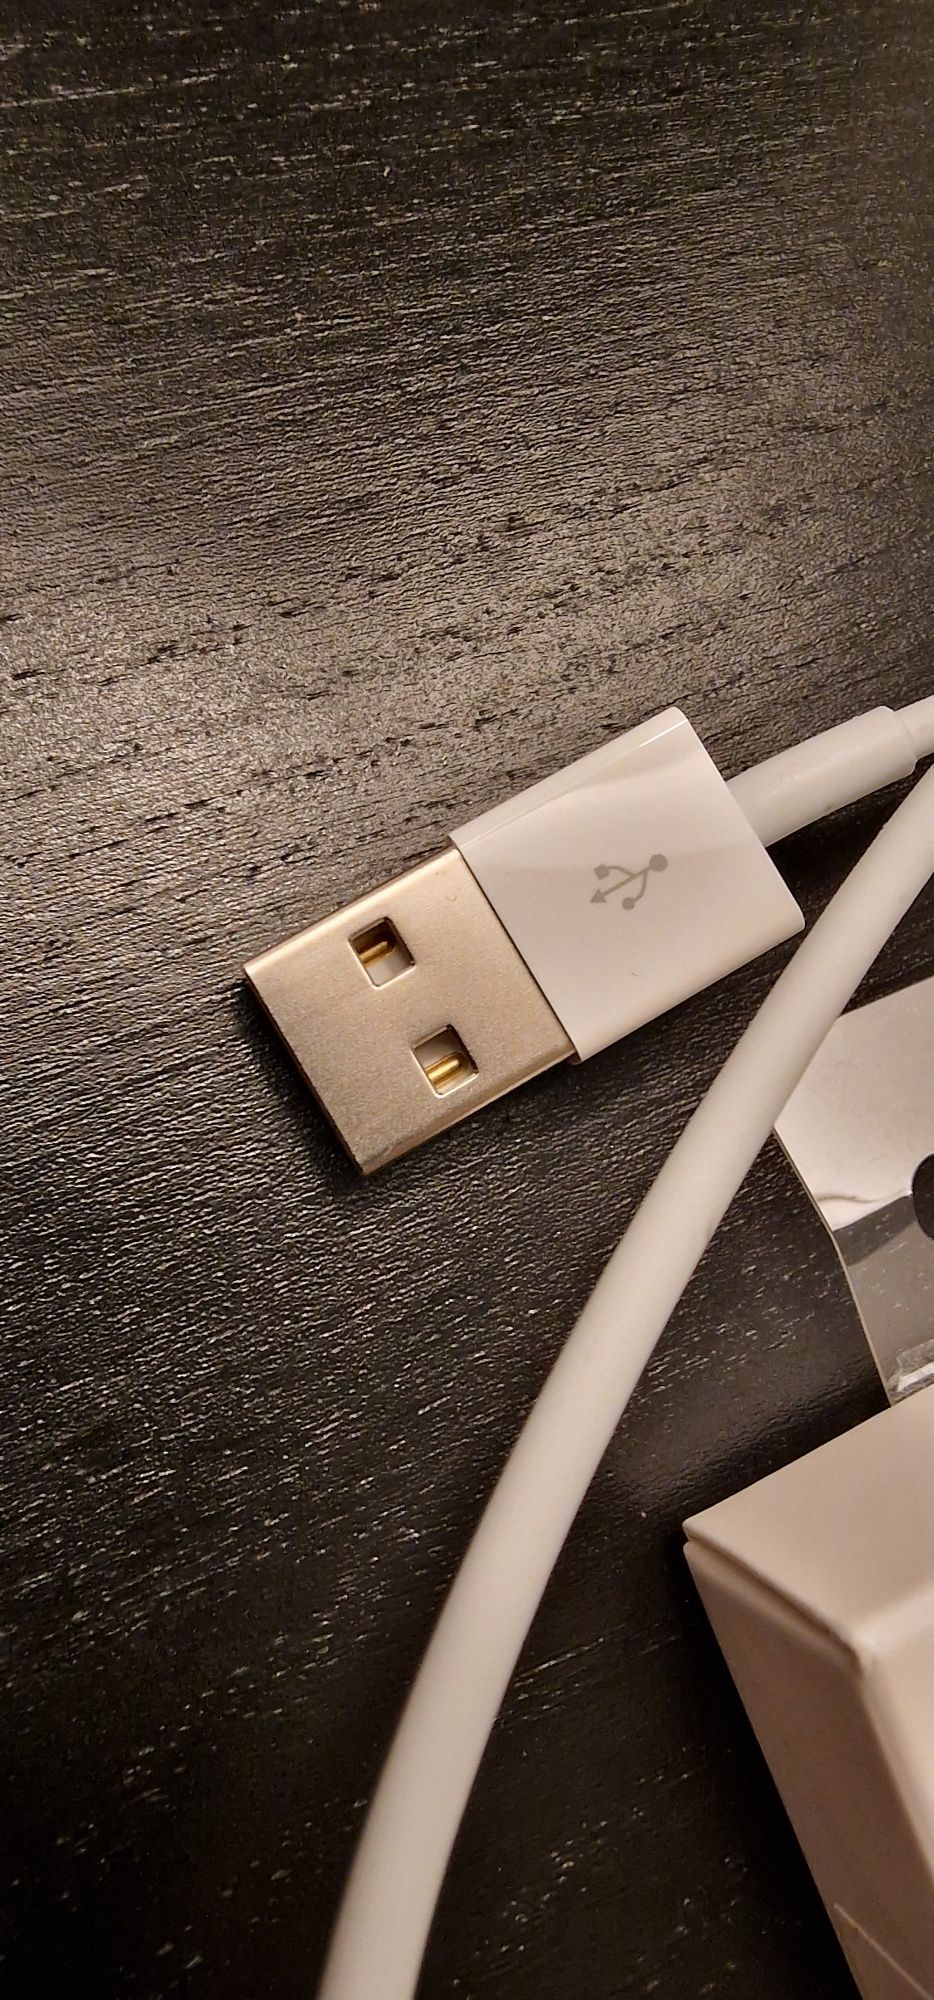 Apple Cabo lightning to USB